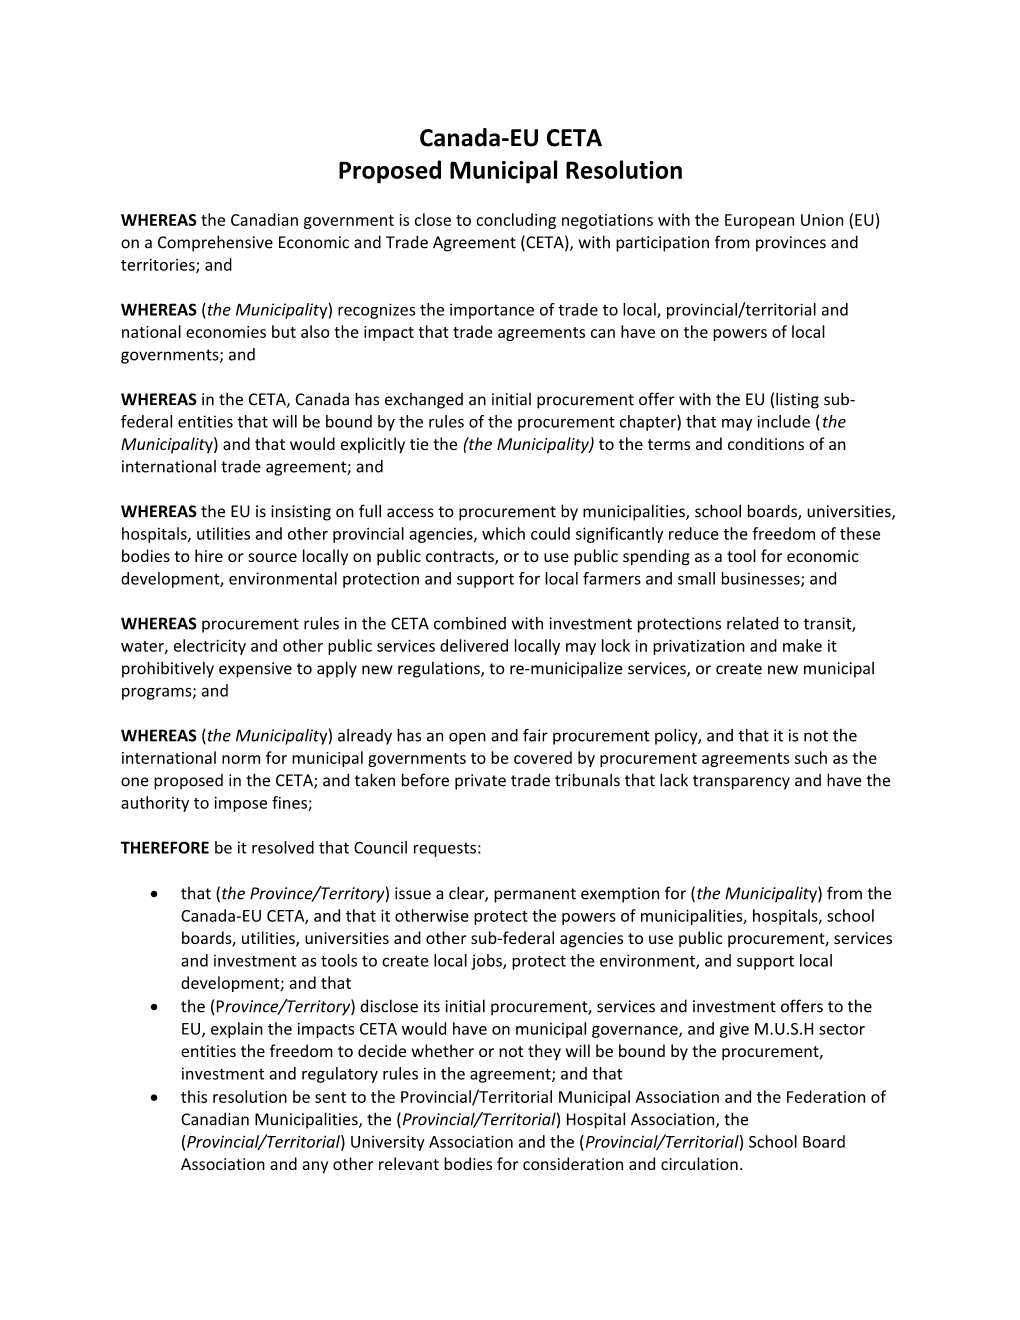 Proposed Municipal Resolution